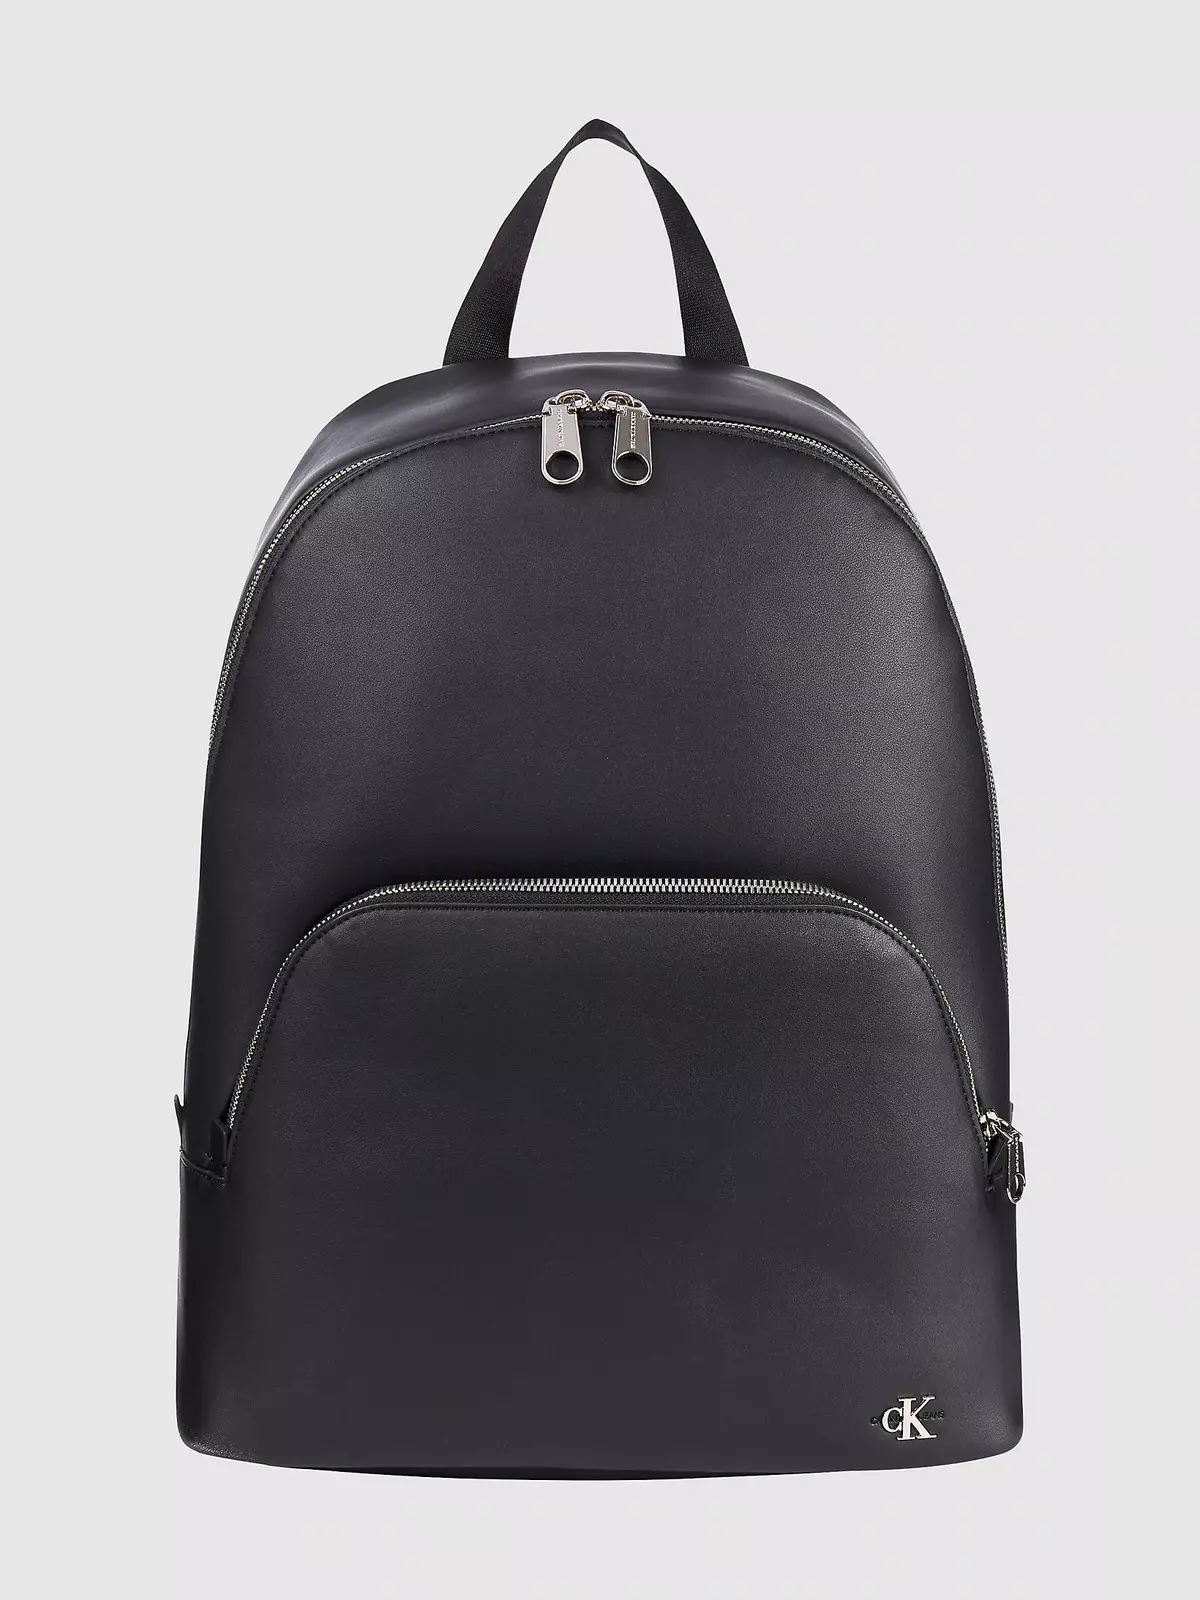 Calvin Klein Backpacks: Black Kike na Mwanaume, Leather Red, White, Yellow Kwa Monogramm na Rangi nyingine Mifuko - Backpacks 15401_37